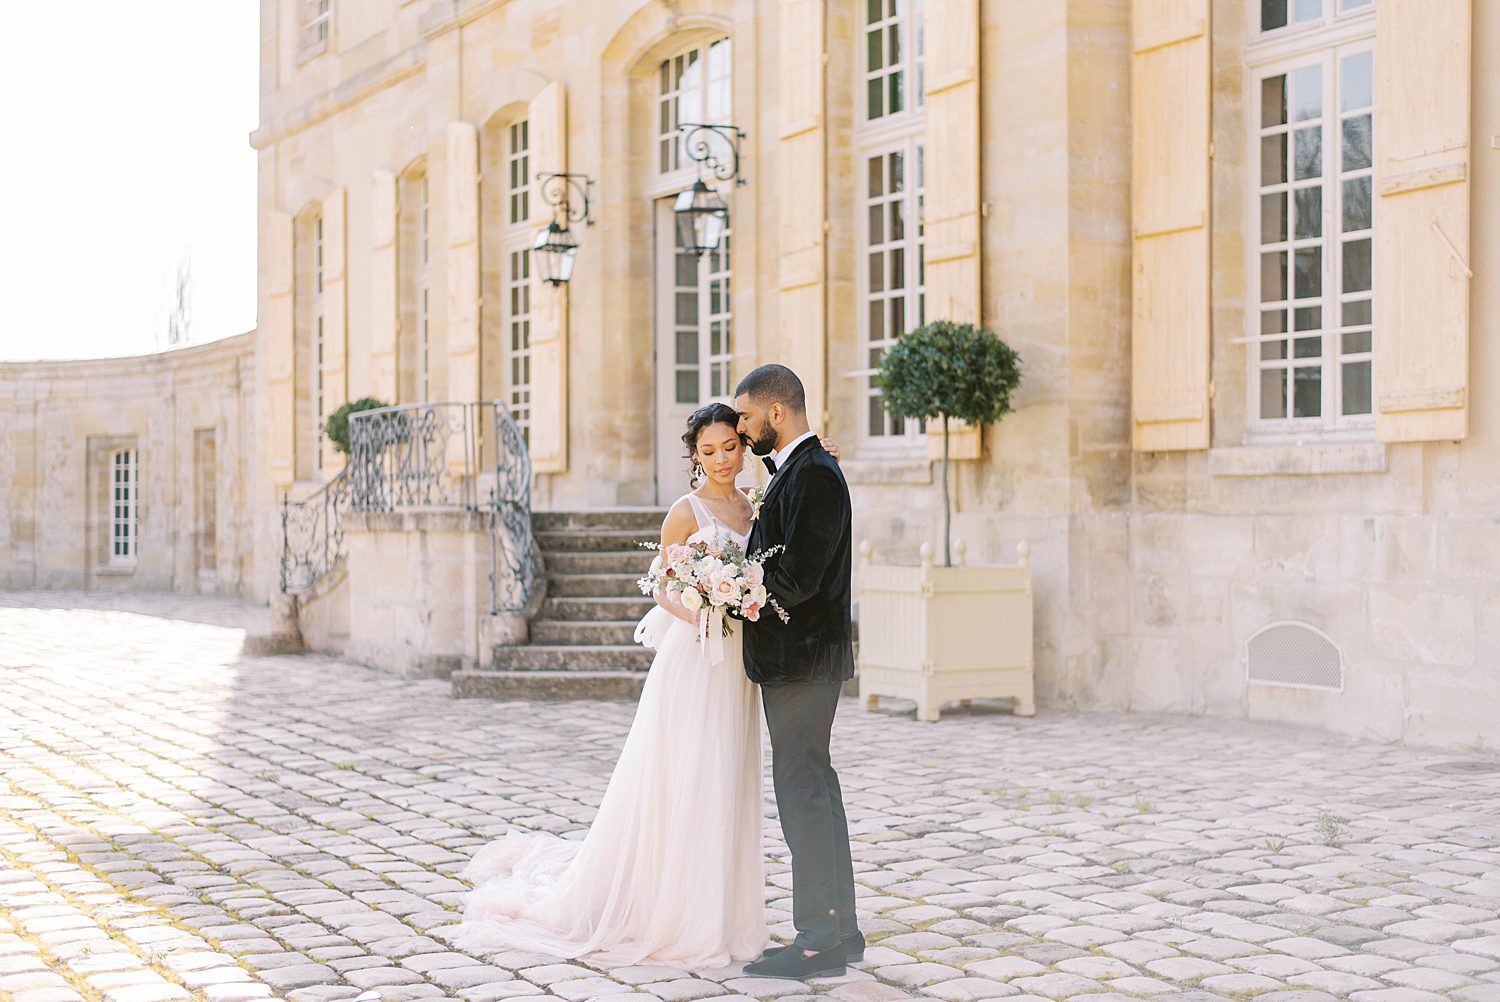 Paris wedding photographer photographs groom nuzzling bride's cheek during Paris wedding photos